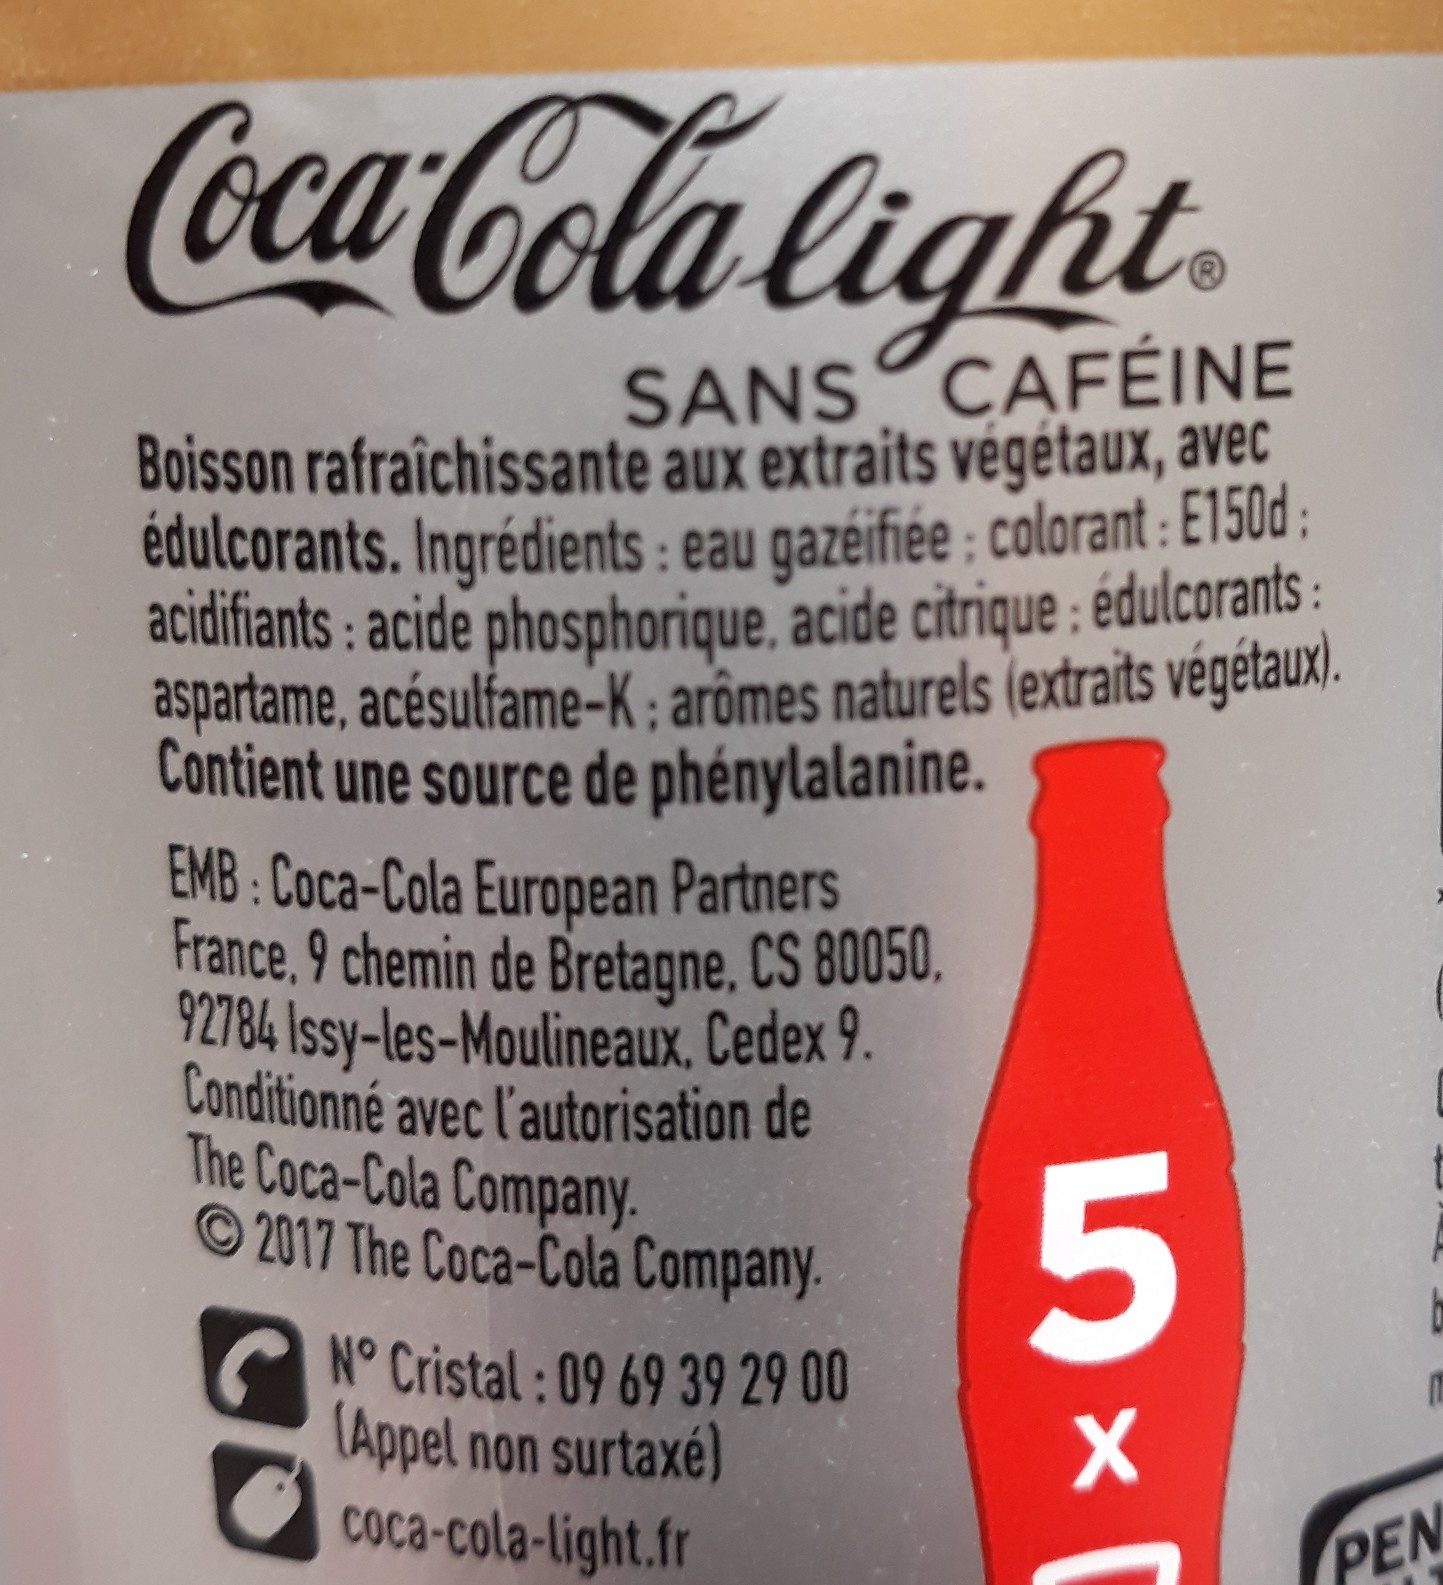 Coca-cola light sans caféine pet - Ingredients - fr